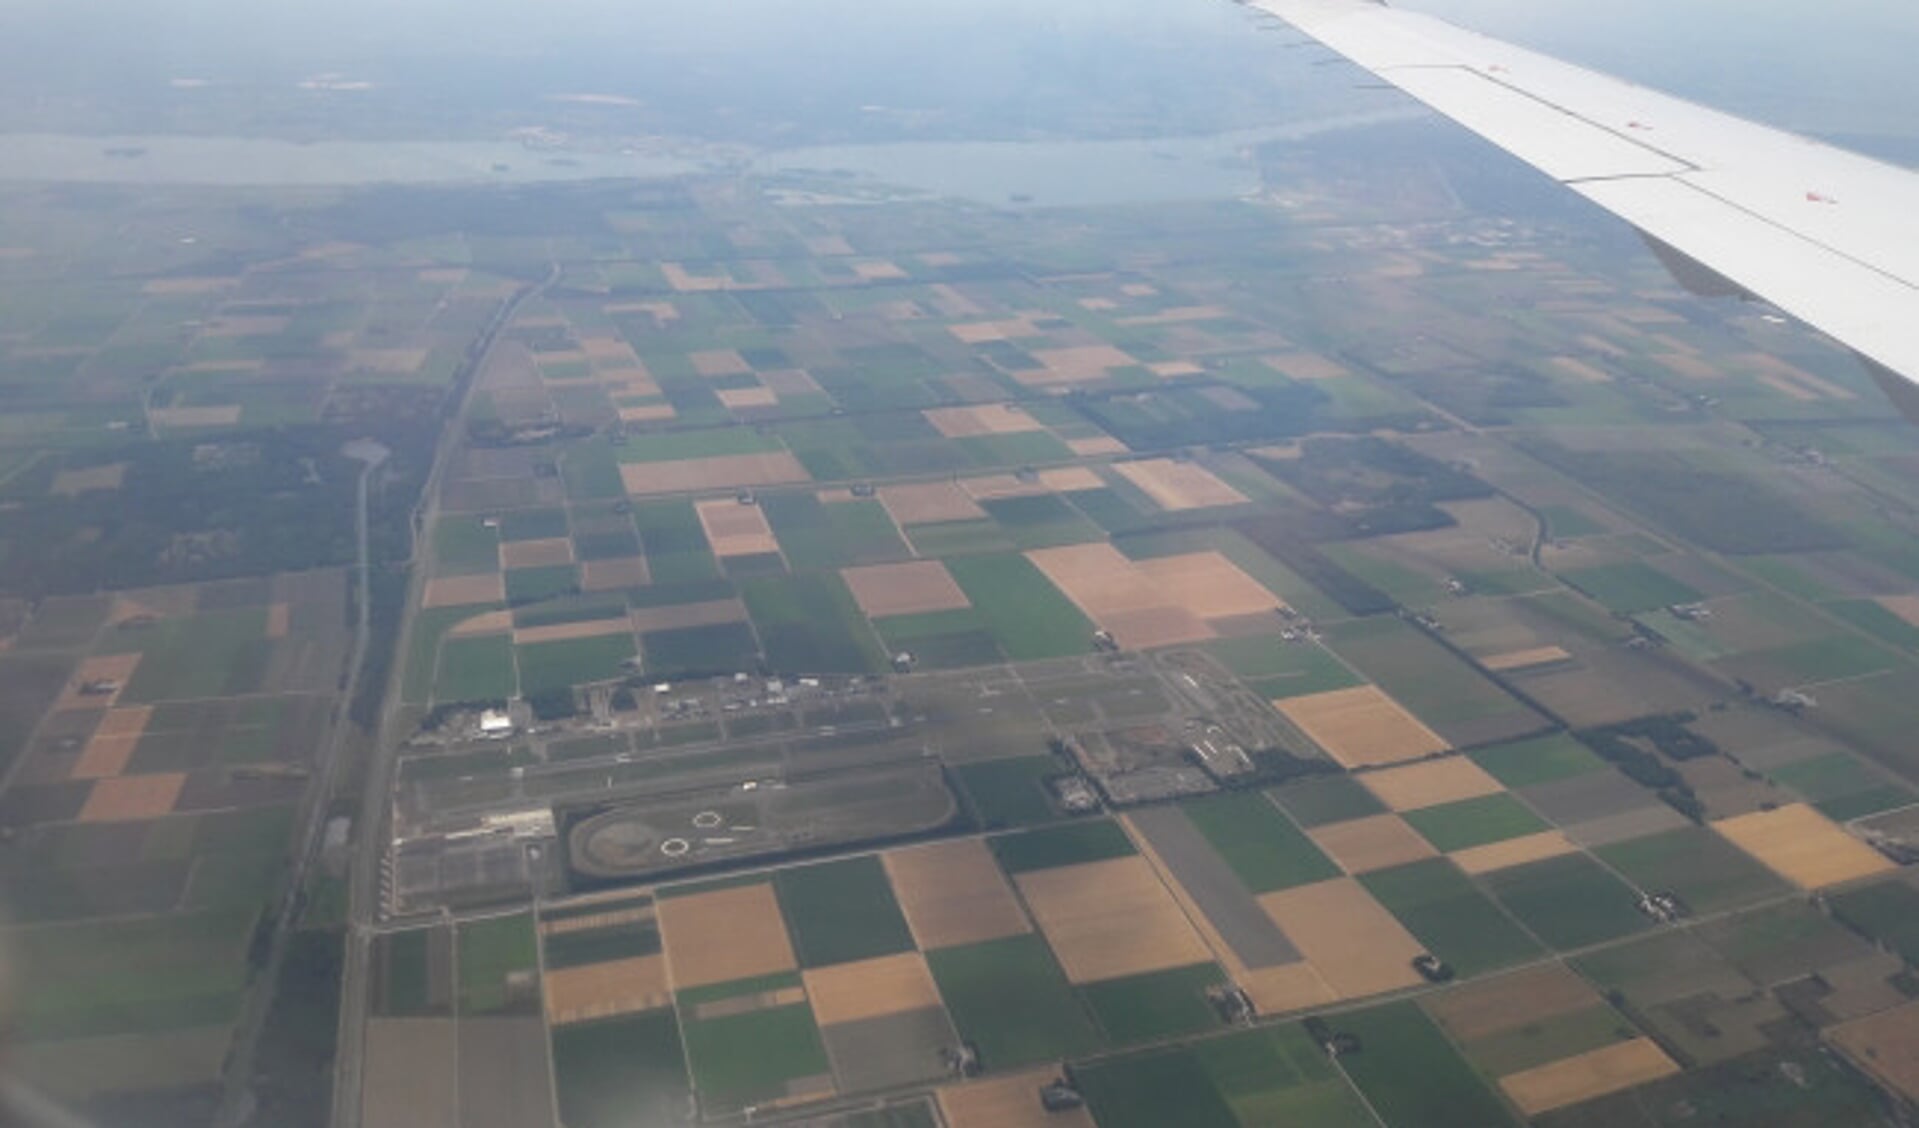  Vliegveld Lelystad vanuit de lucht.